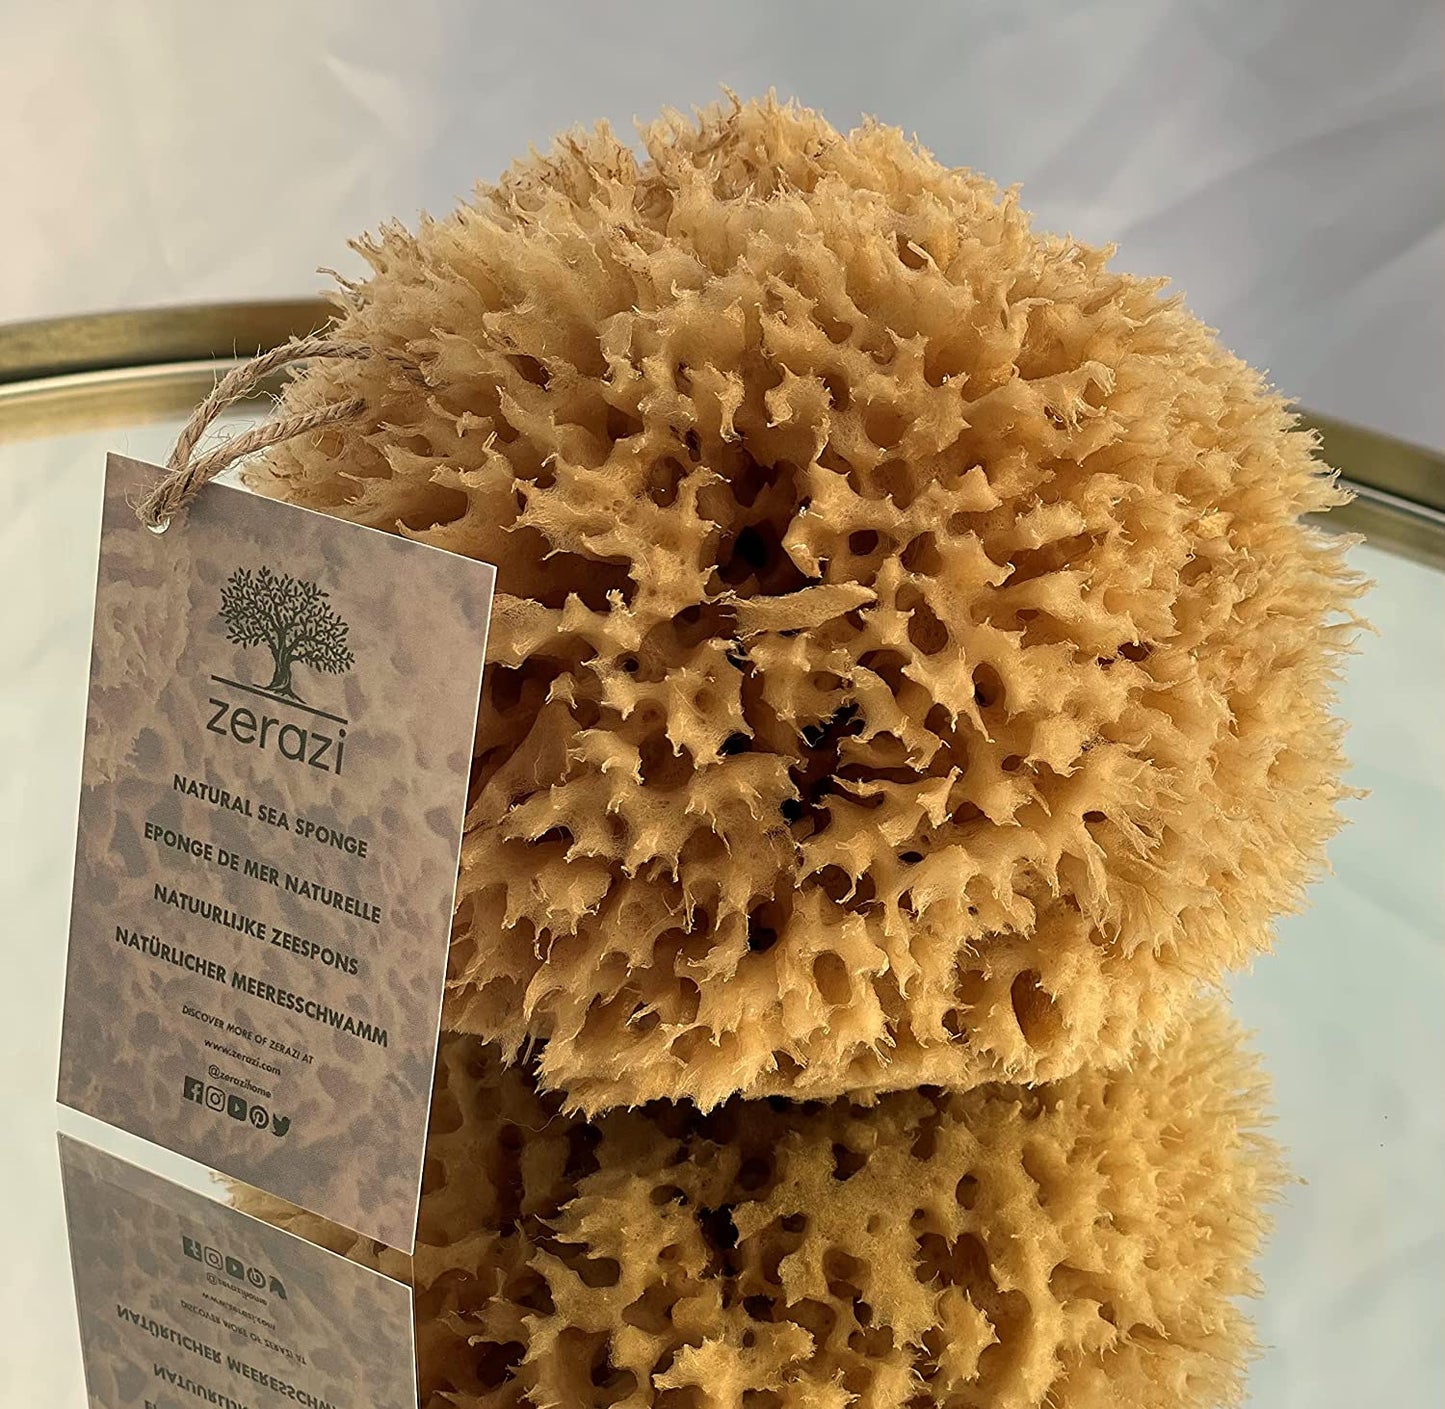 Zerazi | Natural Sea Sponge | 15-16cm | Hygienic | From responsible culture...